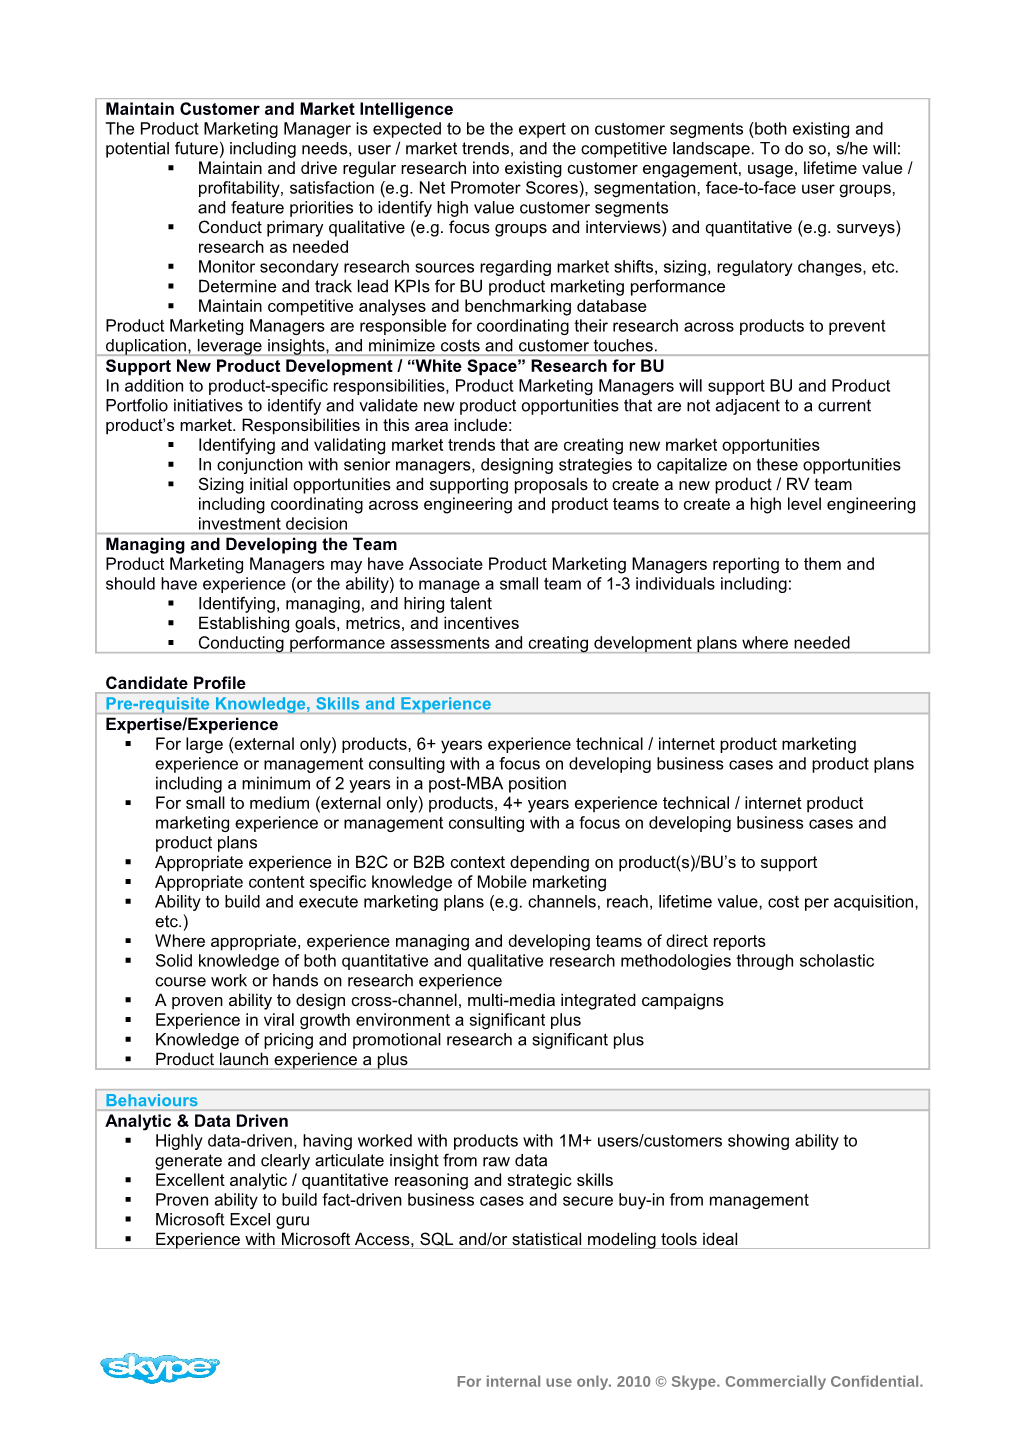 Product Marketing Manager Internal Job Description (10